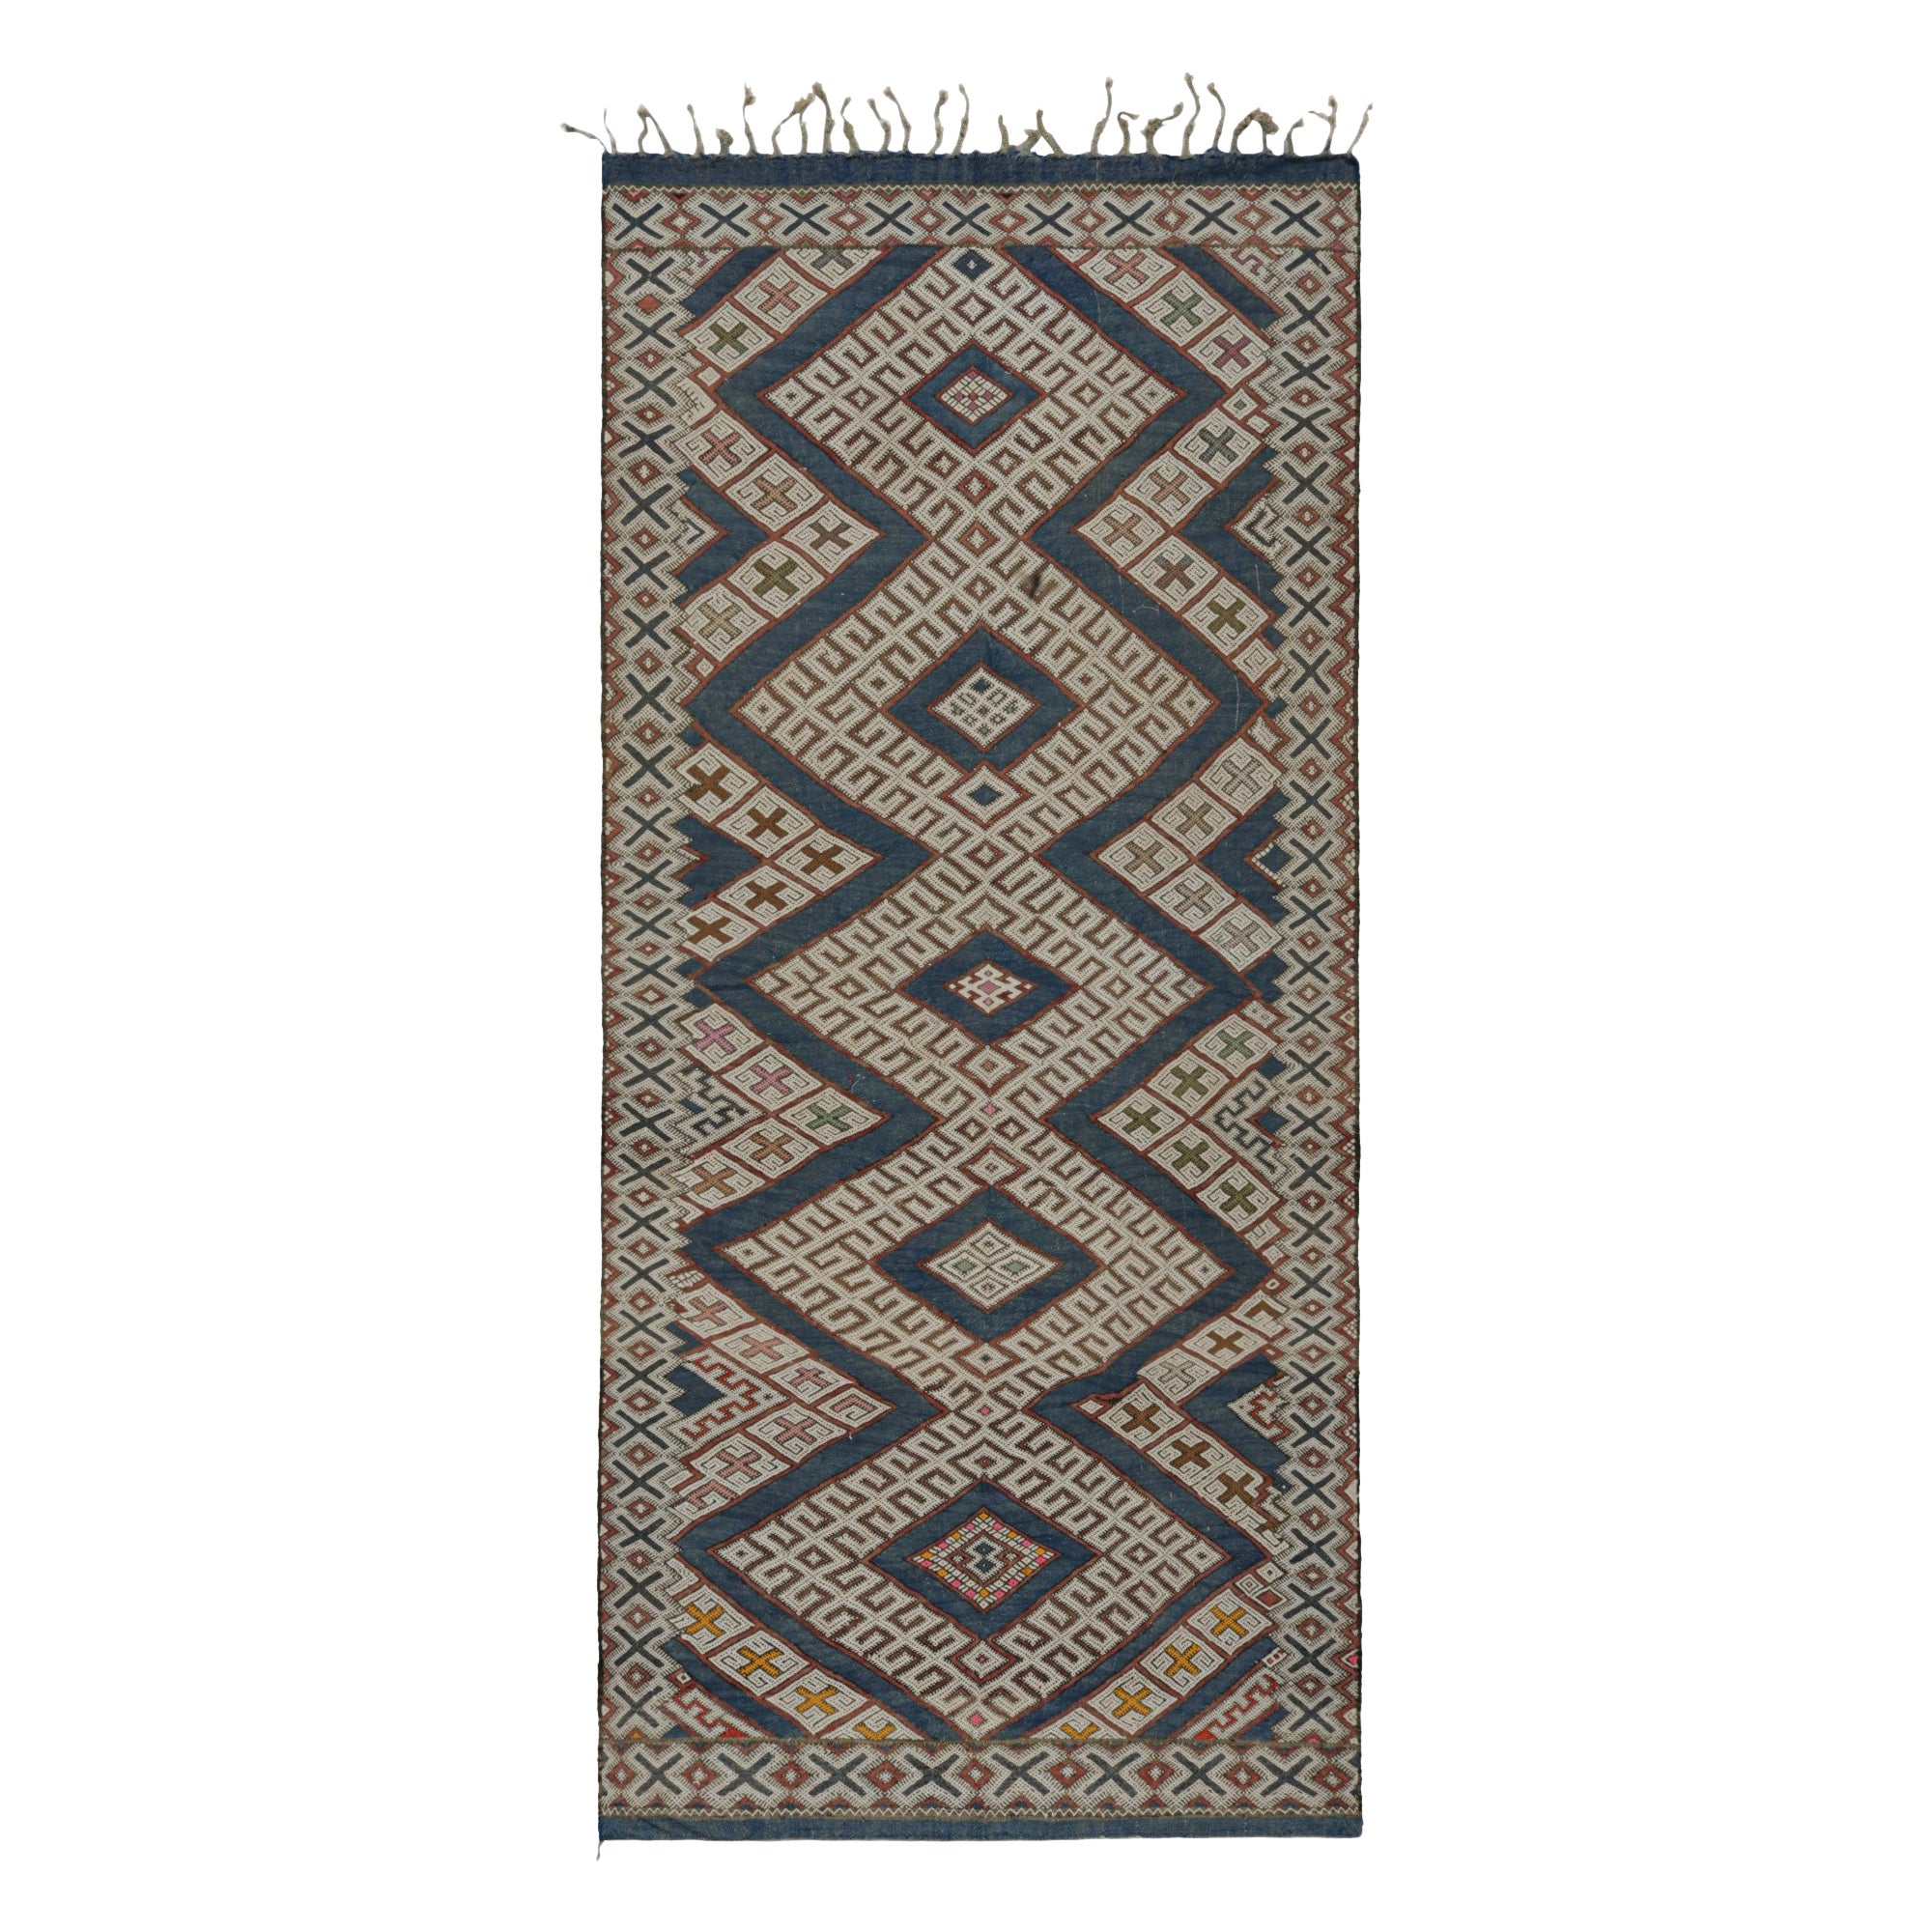 Vintage Zayane Moroccan Kilim Rug, with Geometric Patterns, from Rug & Kilim For Sale